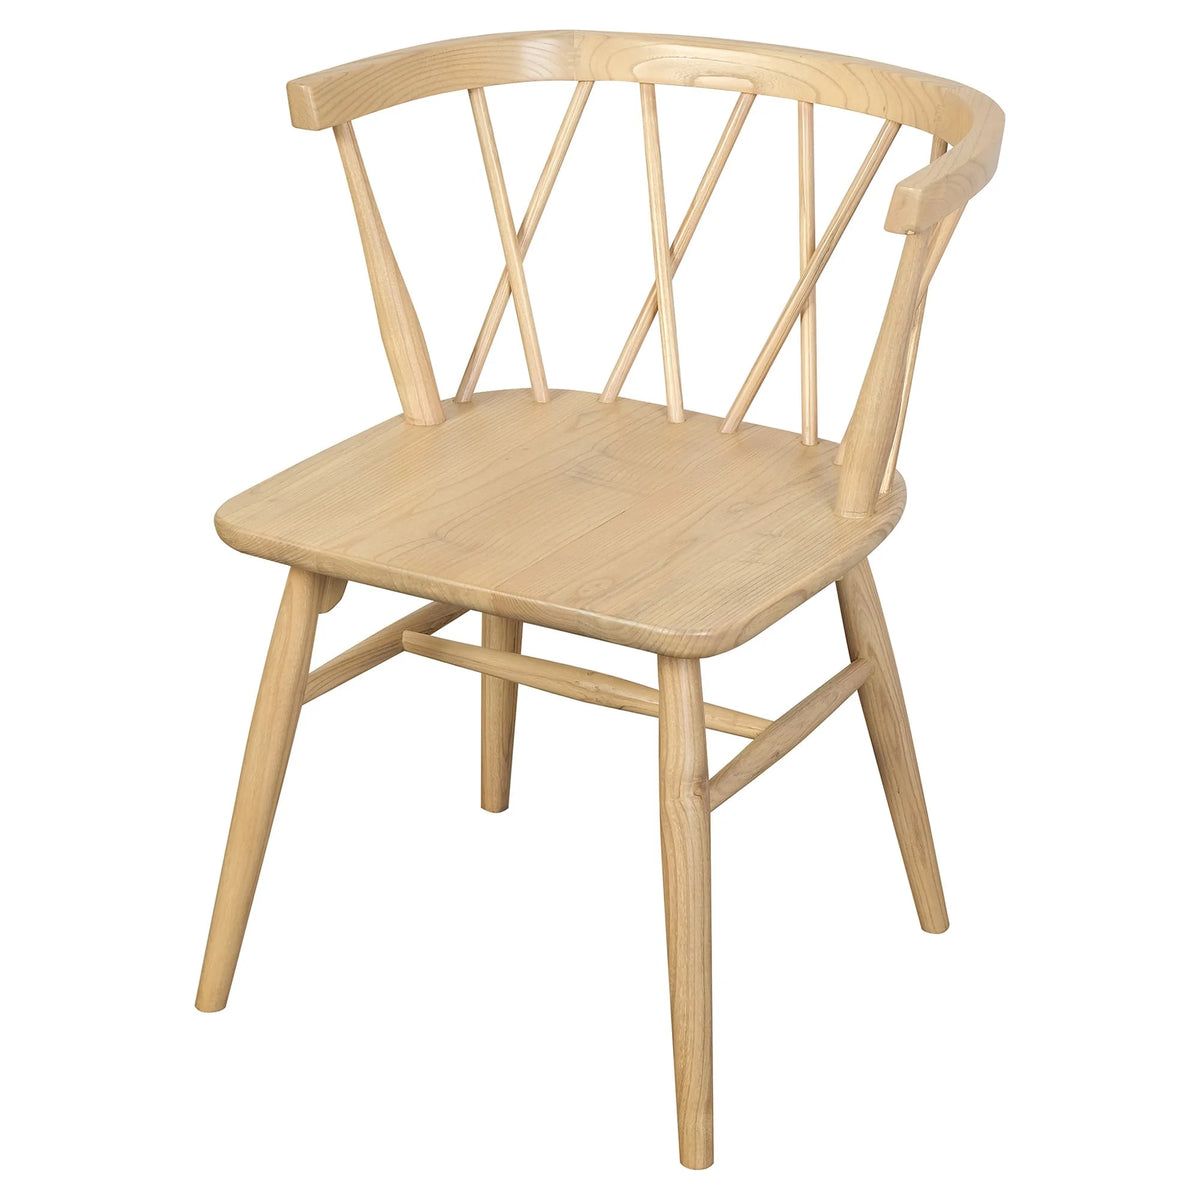 Set of 2 Sierra Solid Oak Cross Back Dining Chair - Natural